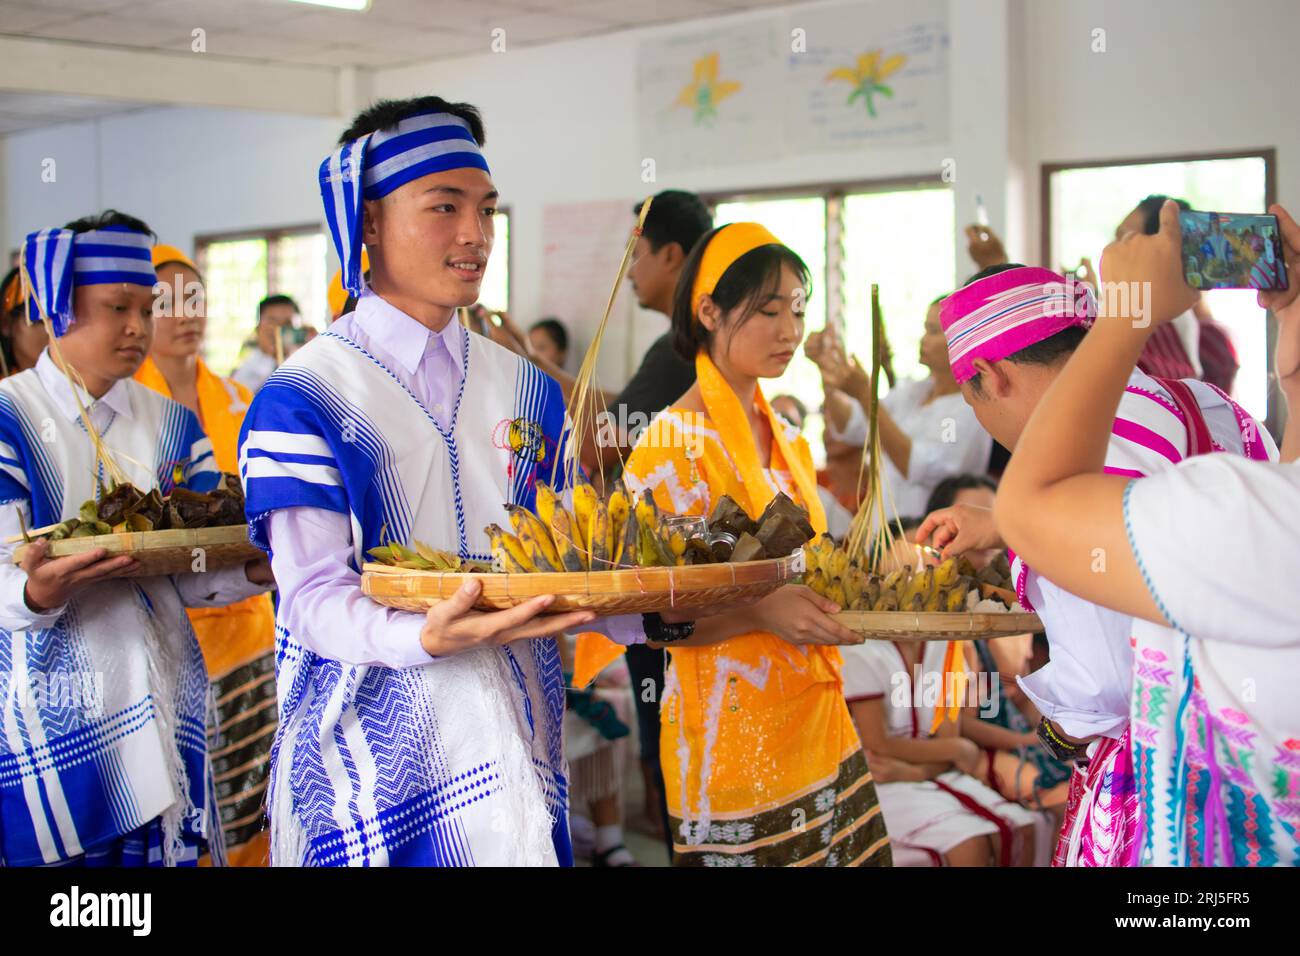 Karen Traditional wrist tying ceremony : Karen people cerebrate traditional wrist tying ceremony as their culture event. Stock Photo